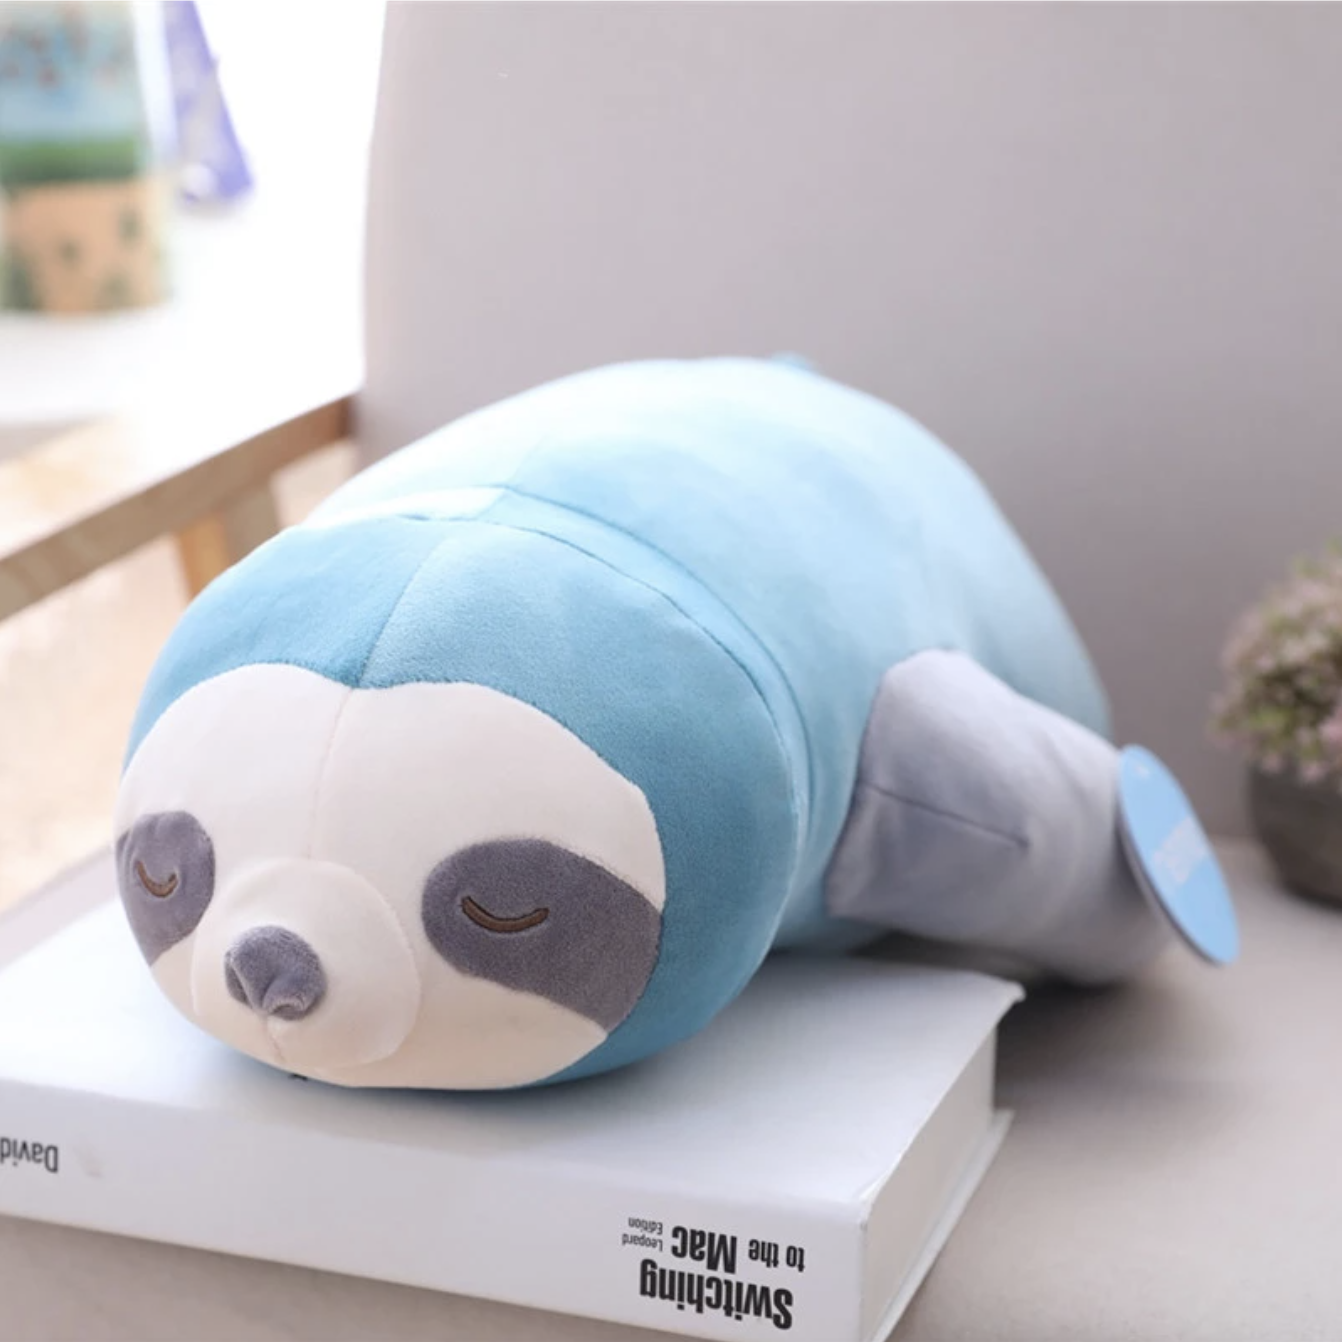 The Sleepy Sloth Pillow